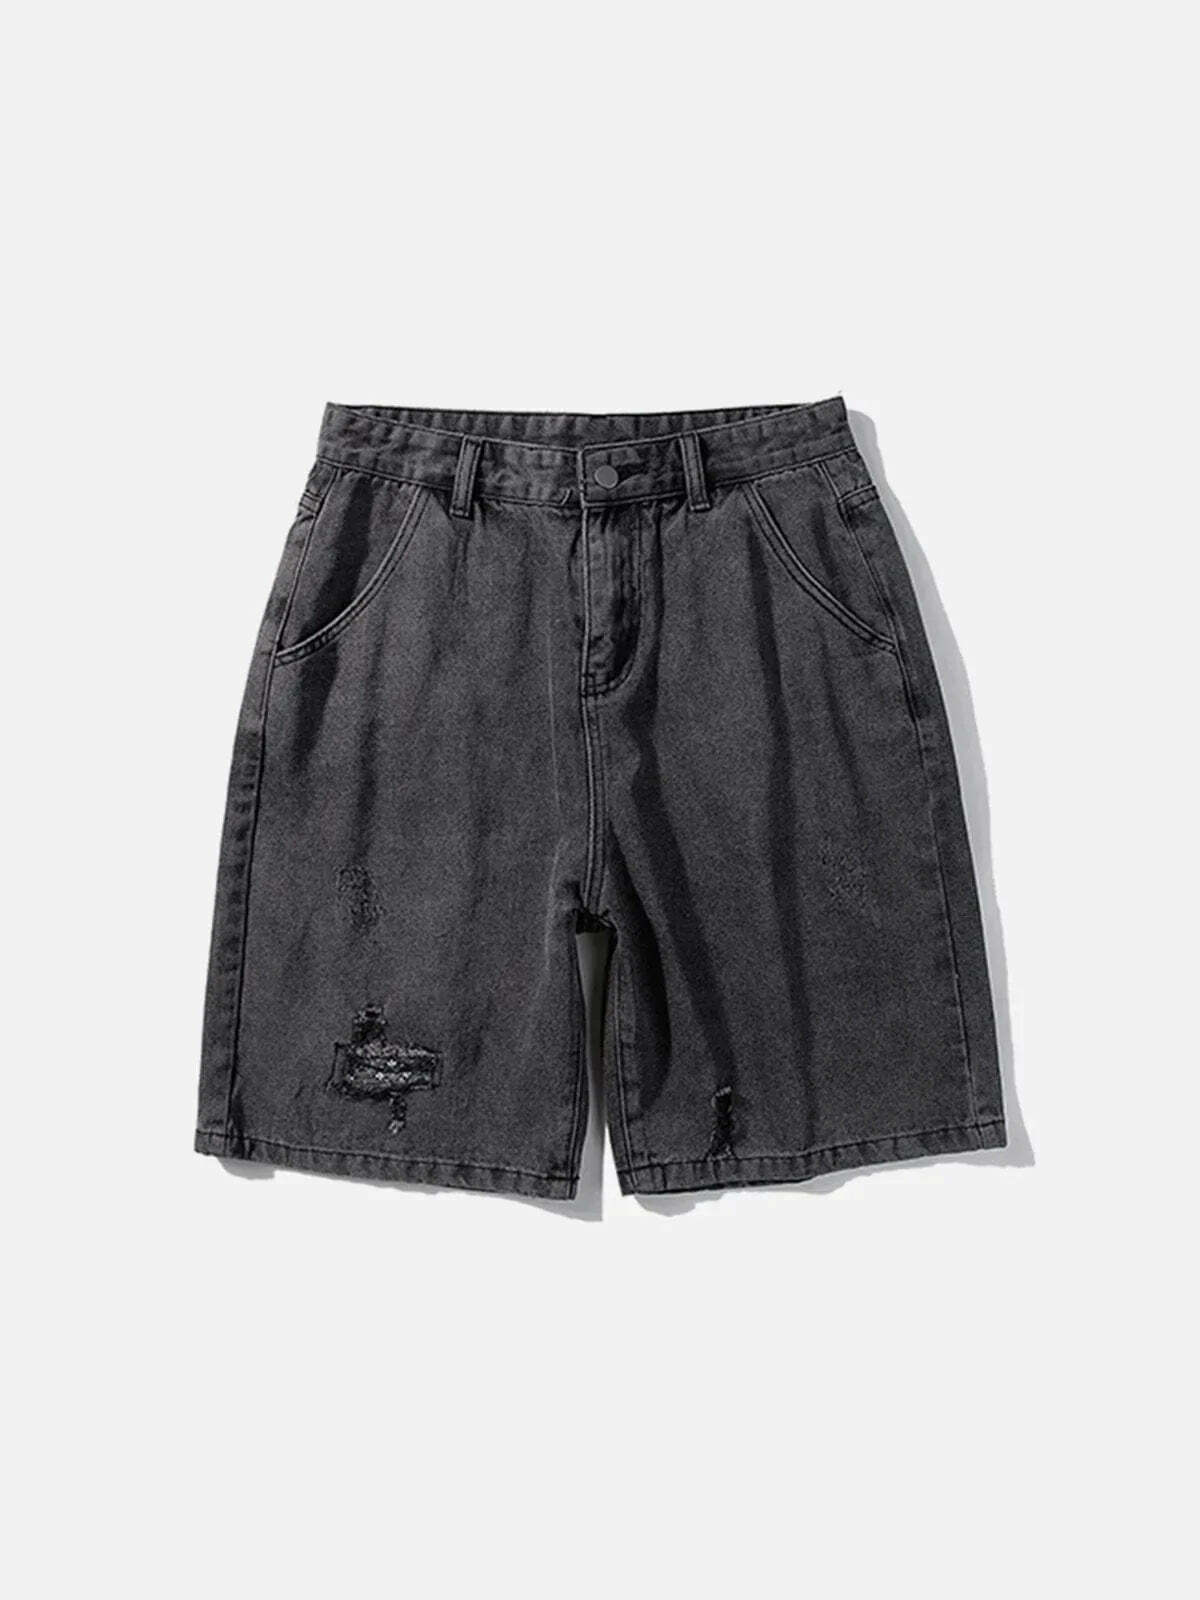 retro shredded denim shorts edgy streetwear staple 7794